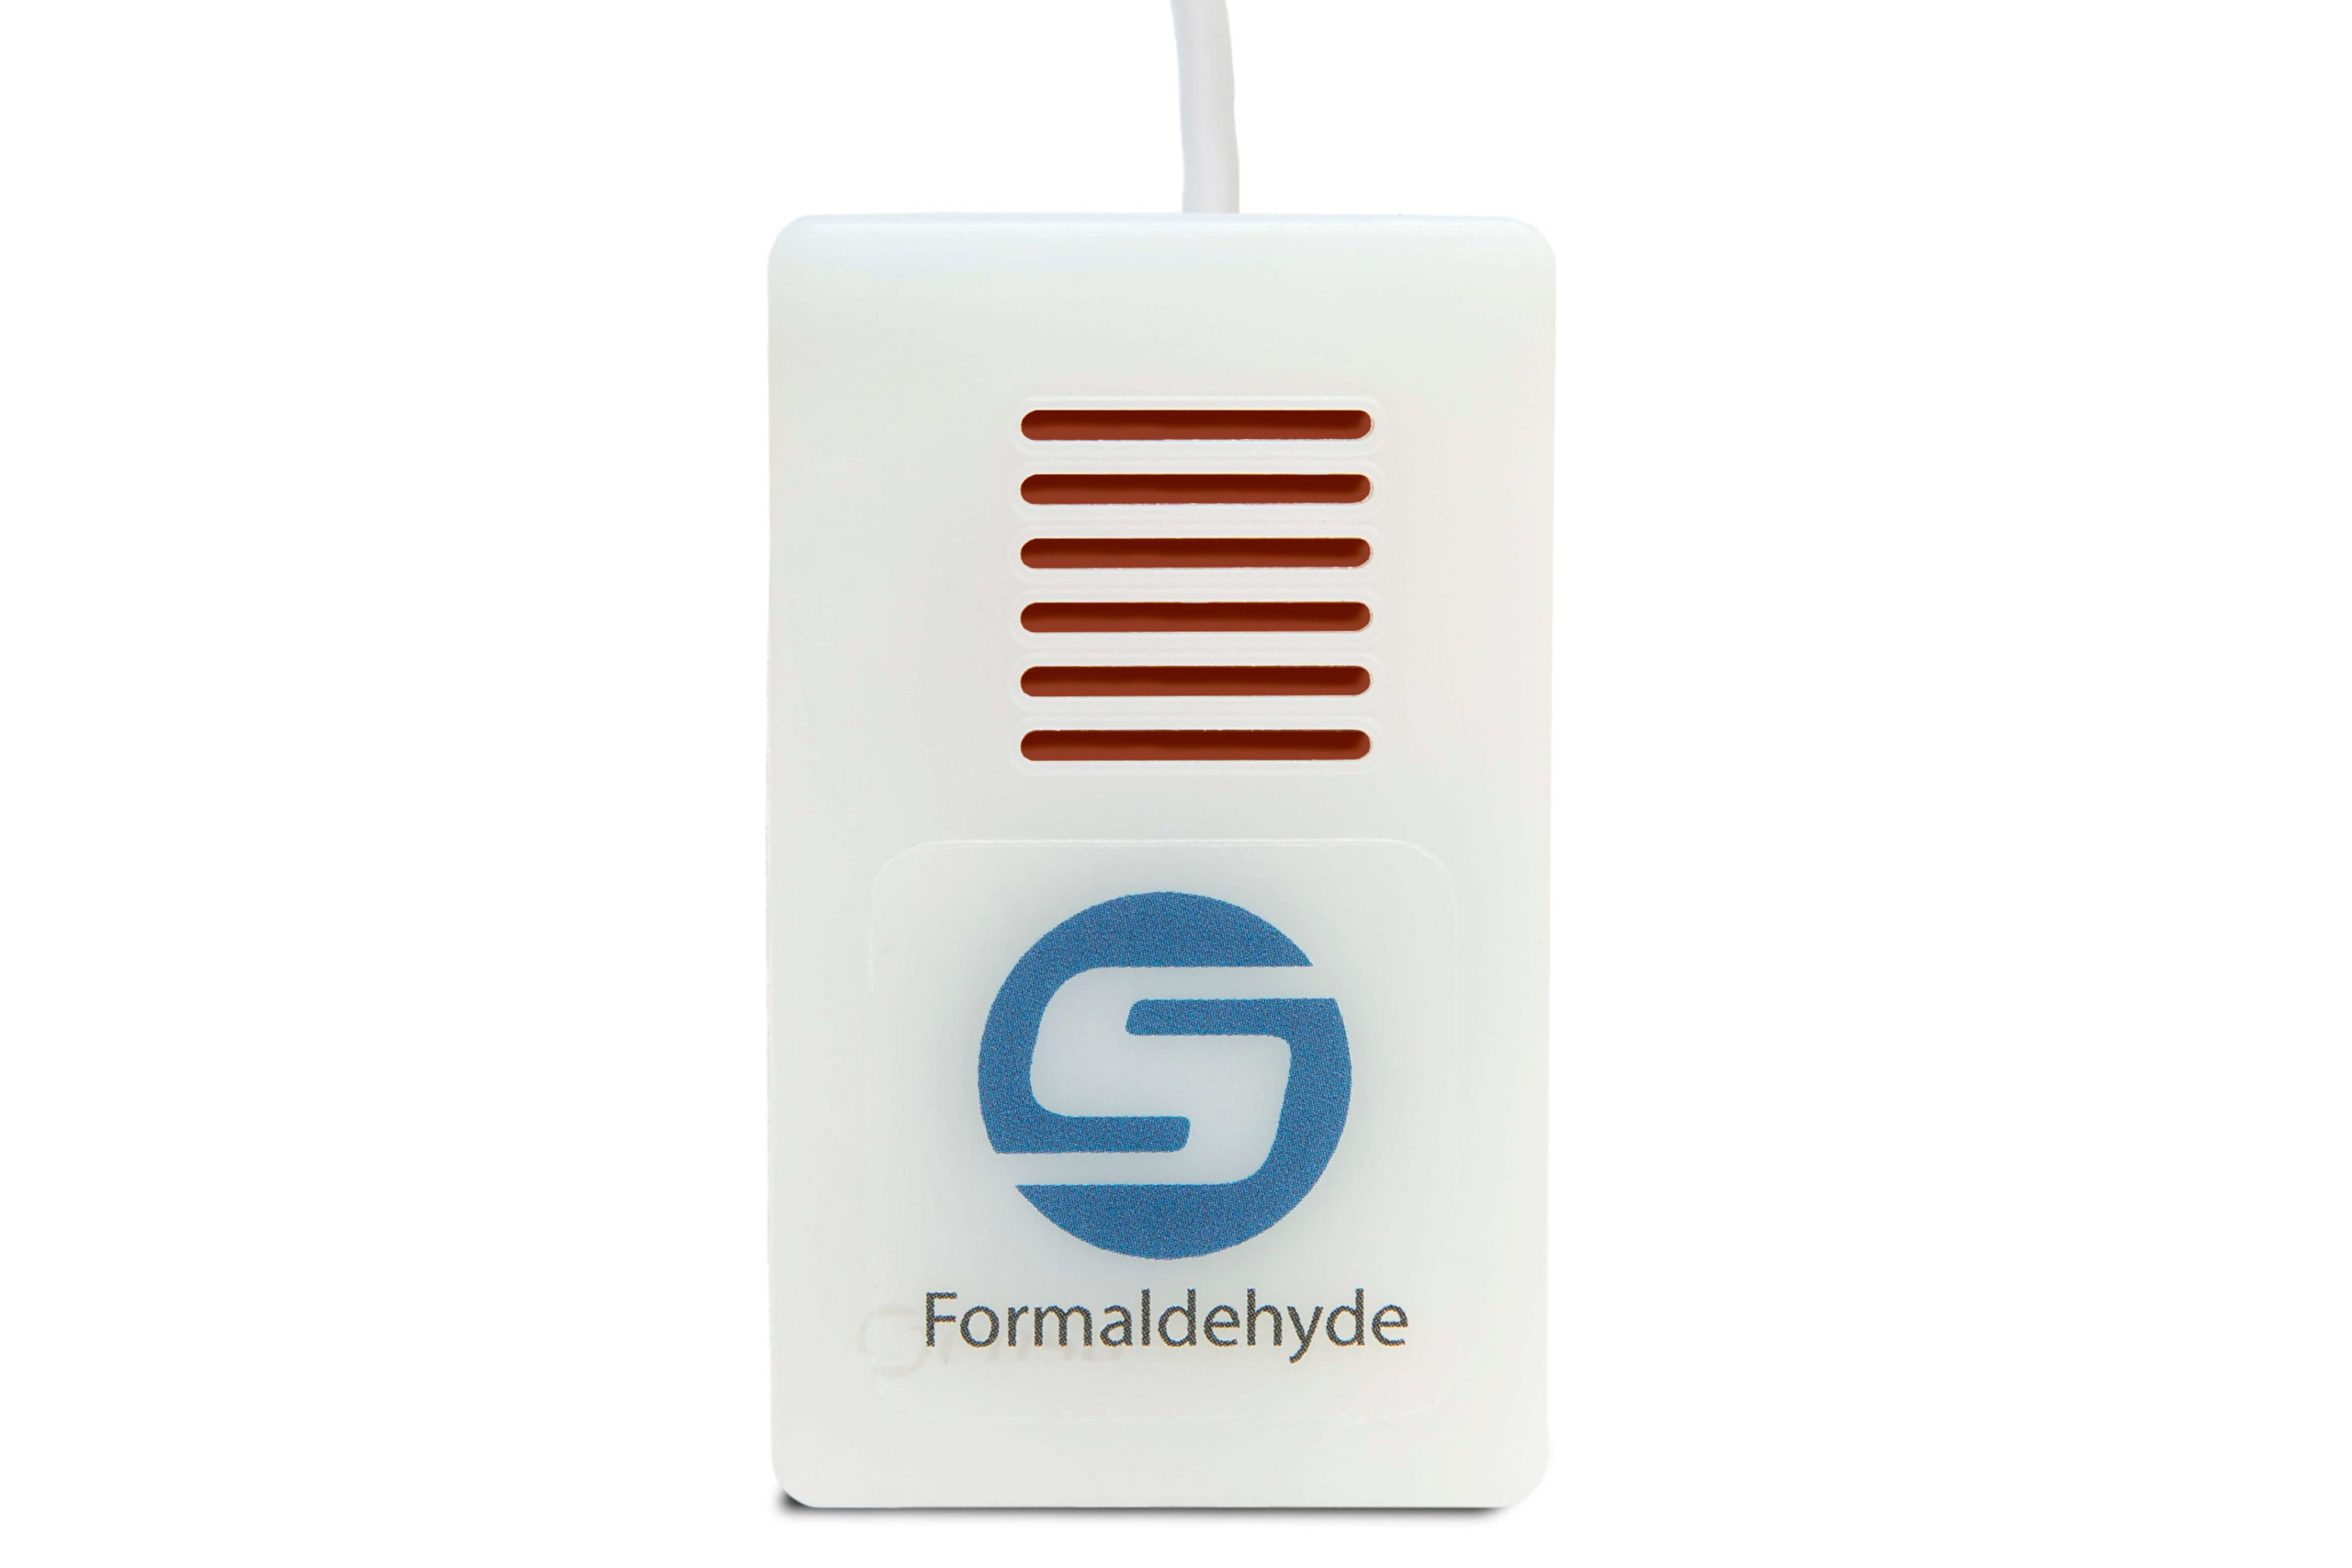 formaldehyde sensor